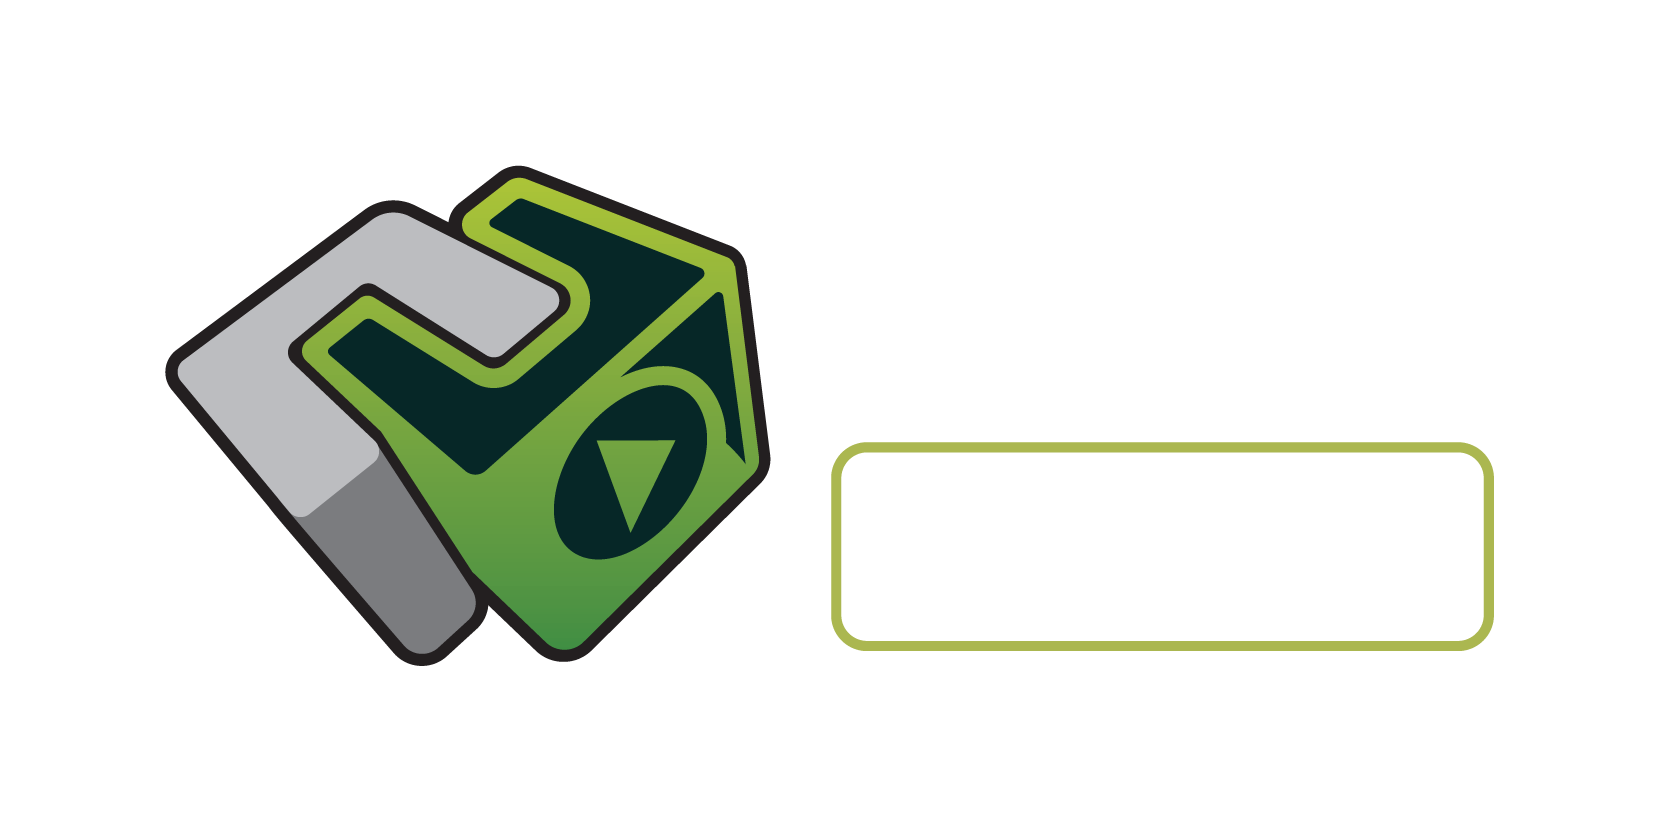 logo_vts_player.png (59 KB)